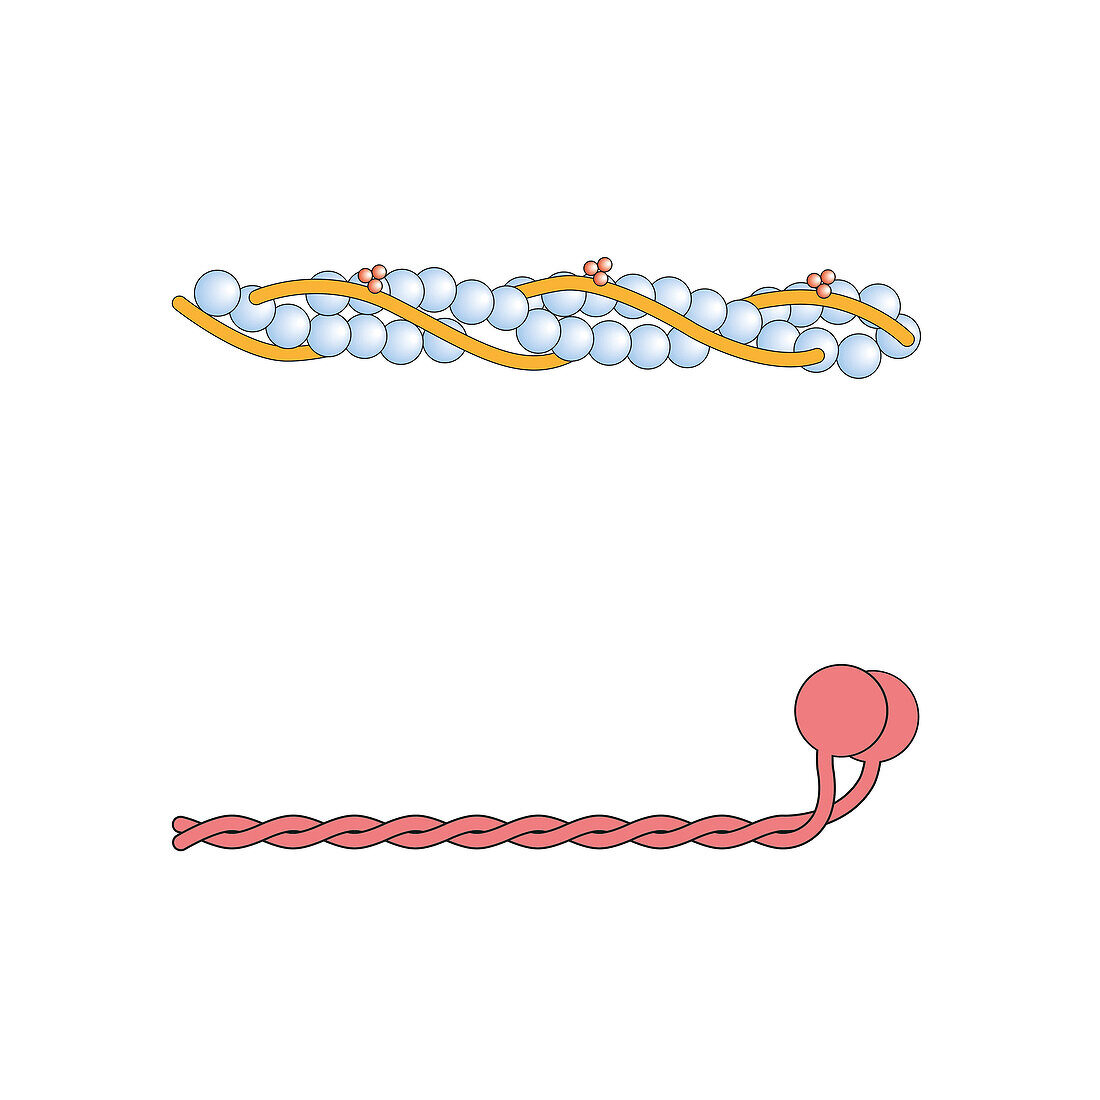 Actin and myosin filaments structure, illustration